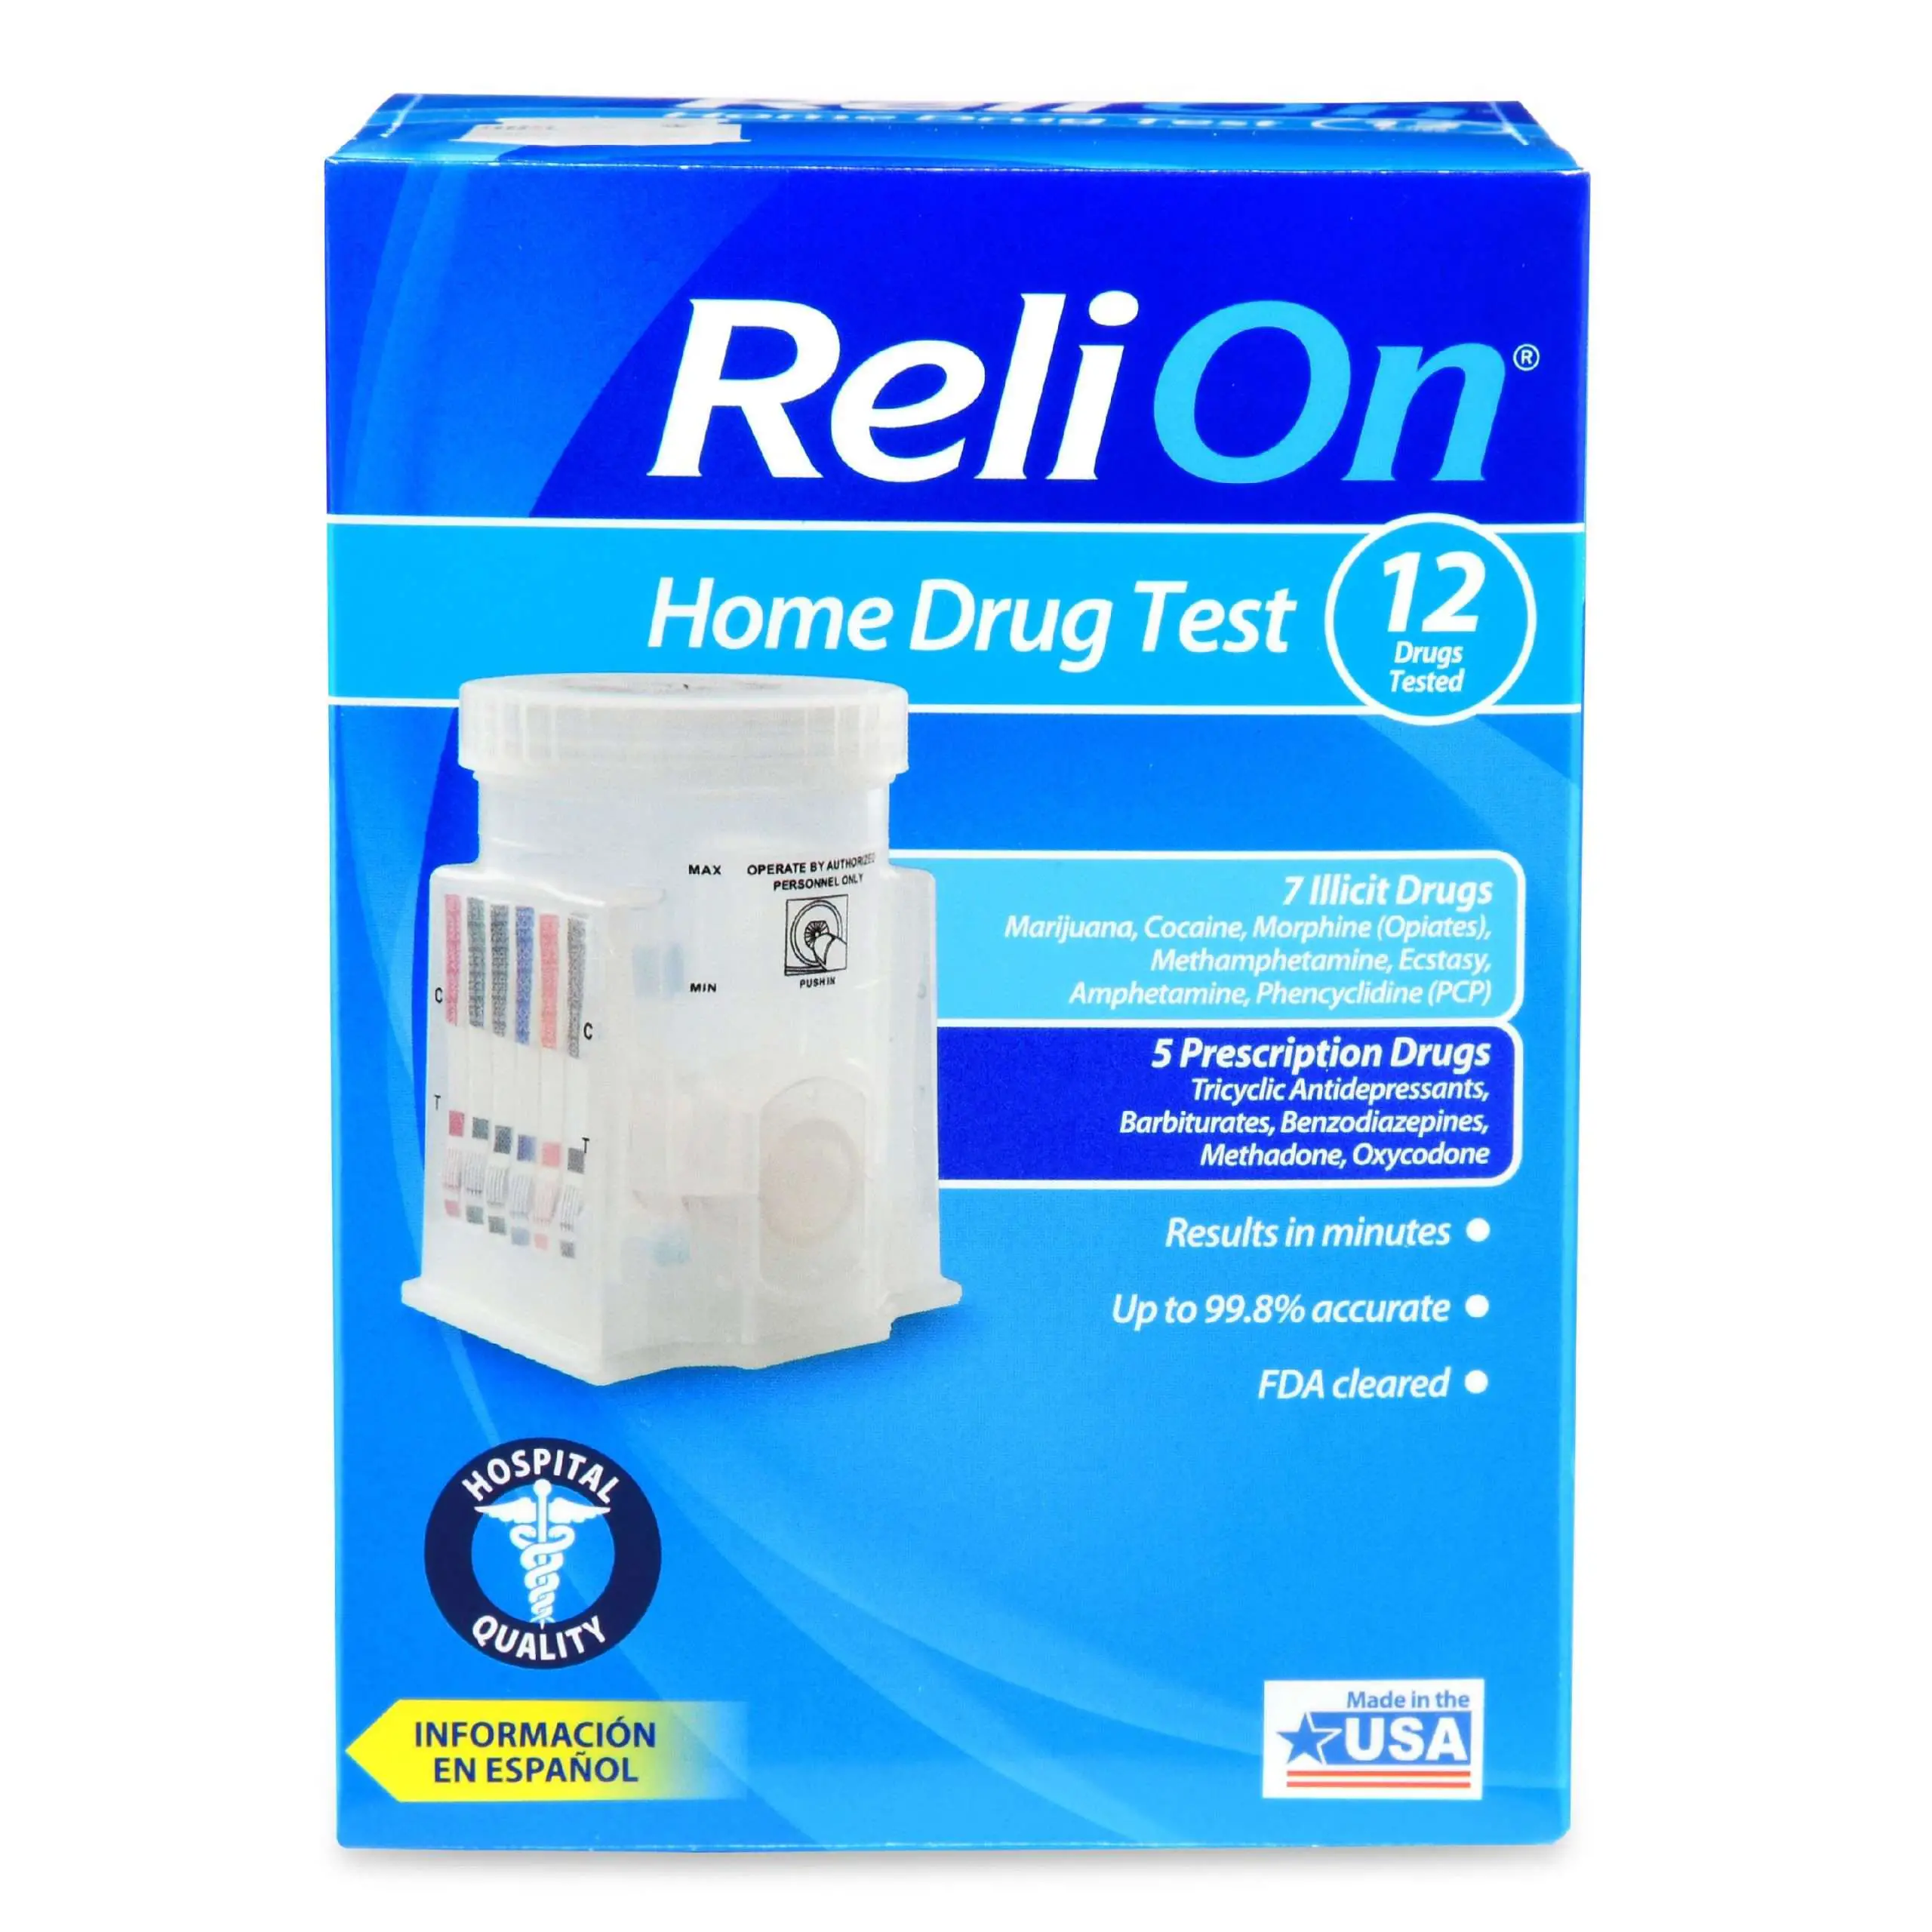 ReliOn Home Drug Test, 12 Drugs Tested